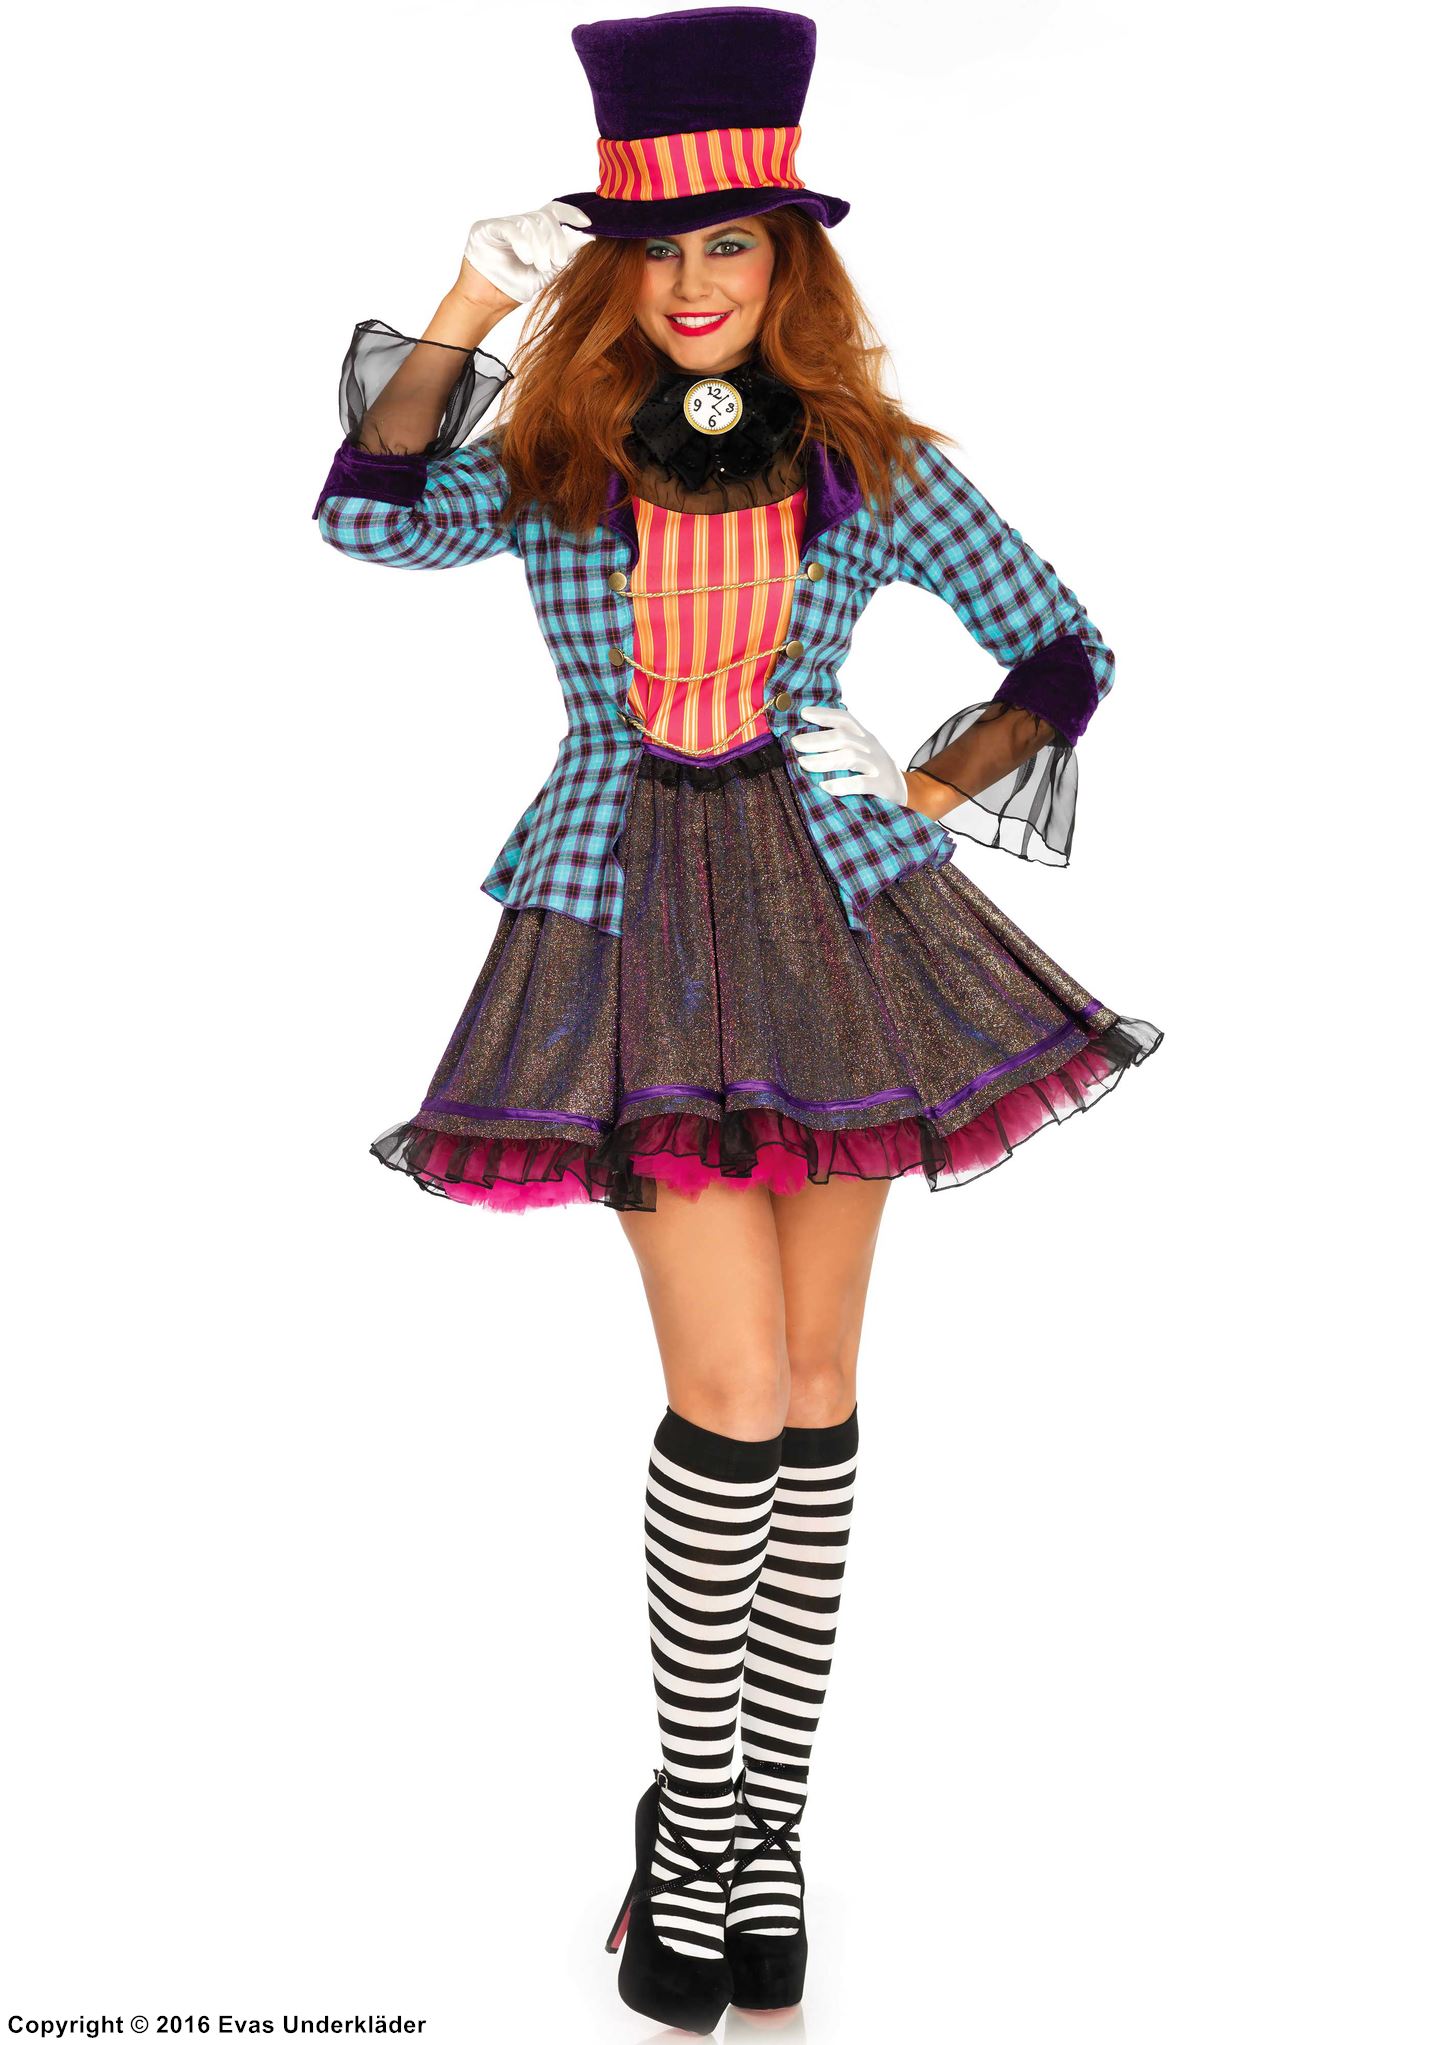 Female Mad Hatter, costume dress, glitter, checkered pattern